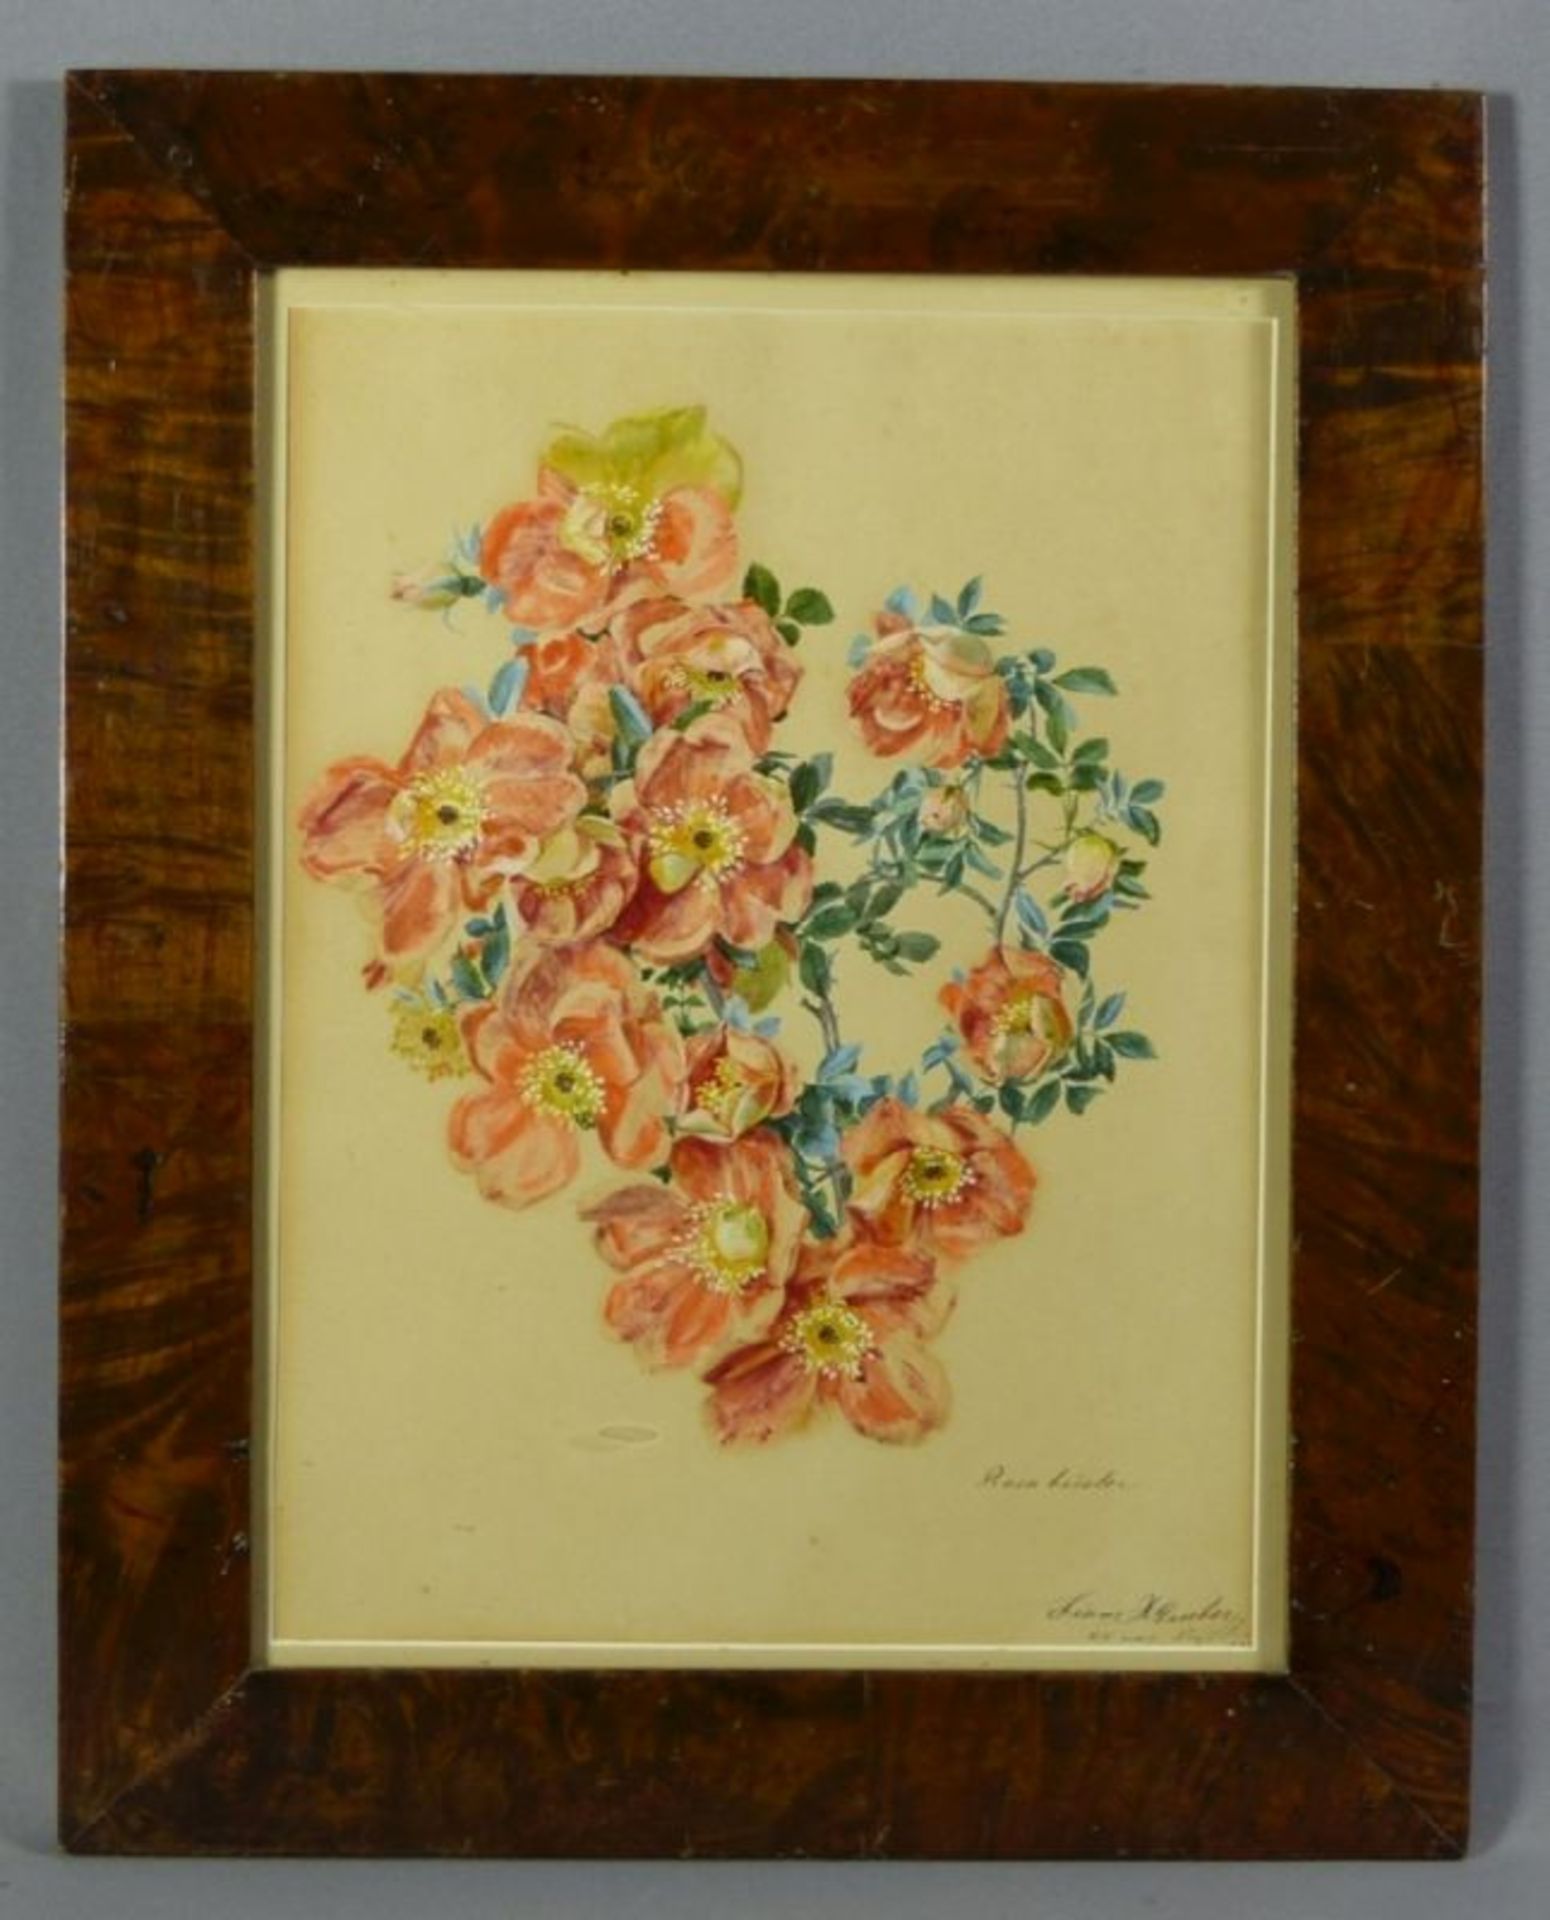 Gruber, Franz Xaver (Attrib.): "Rosa bicolor" - Image 2 of 4